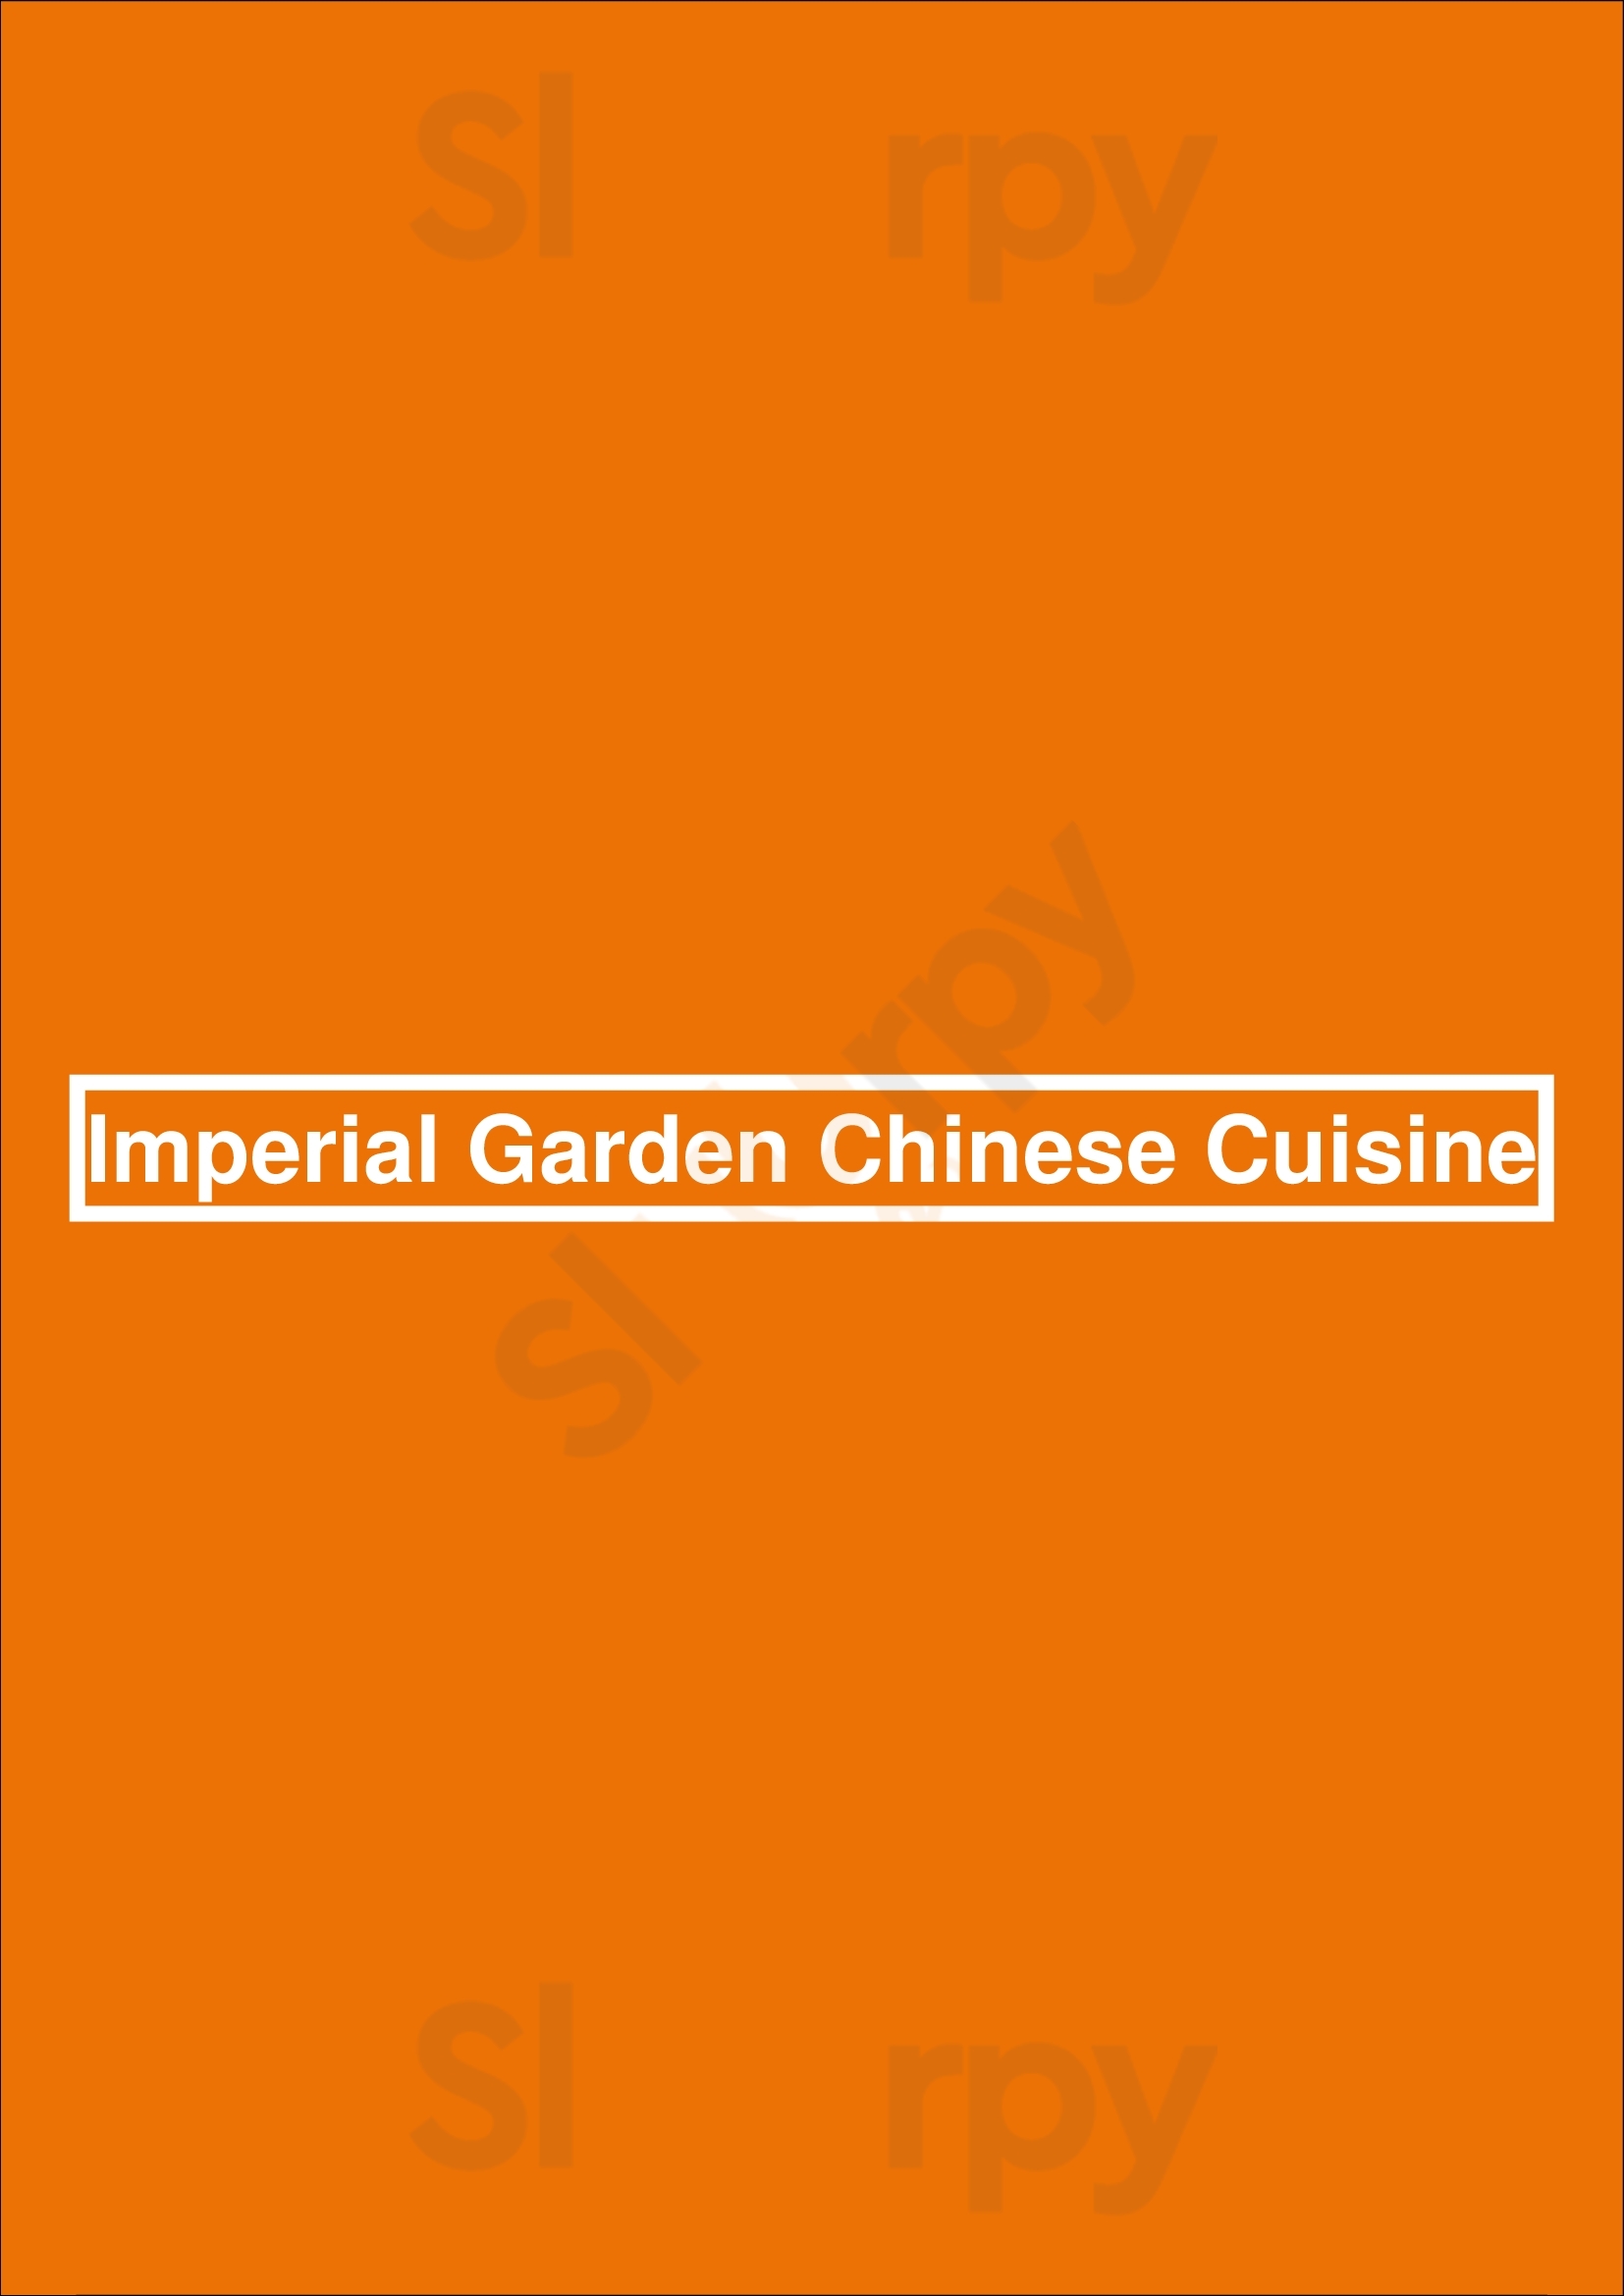 Imperial Garden Chinese Cuisine Surrey Menu - 1